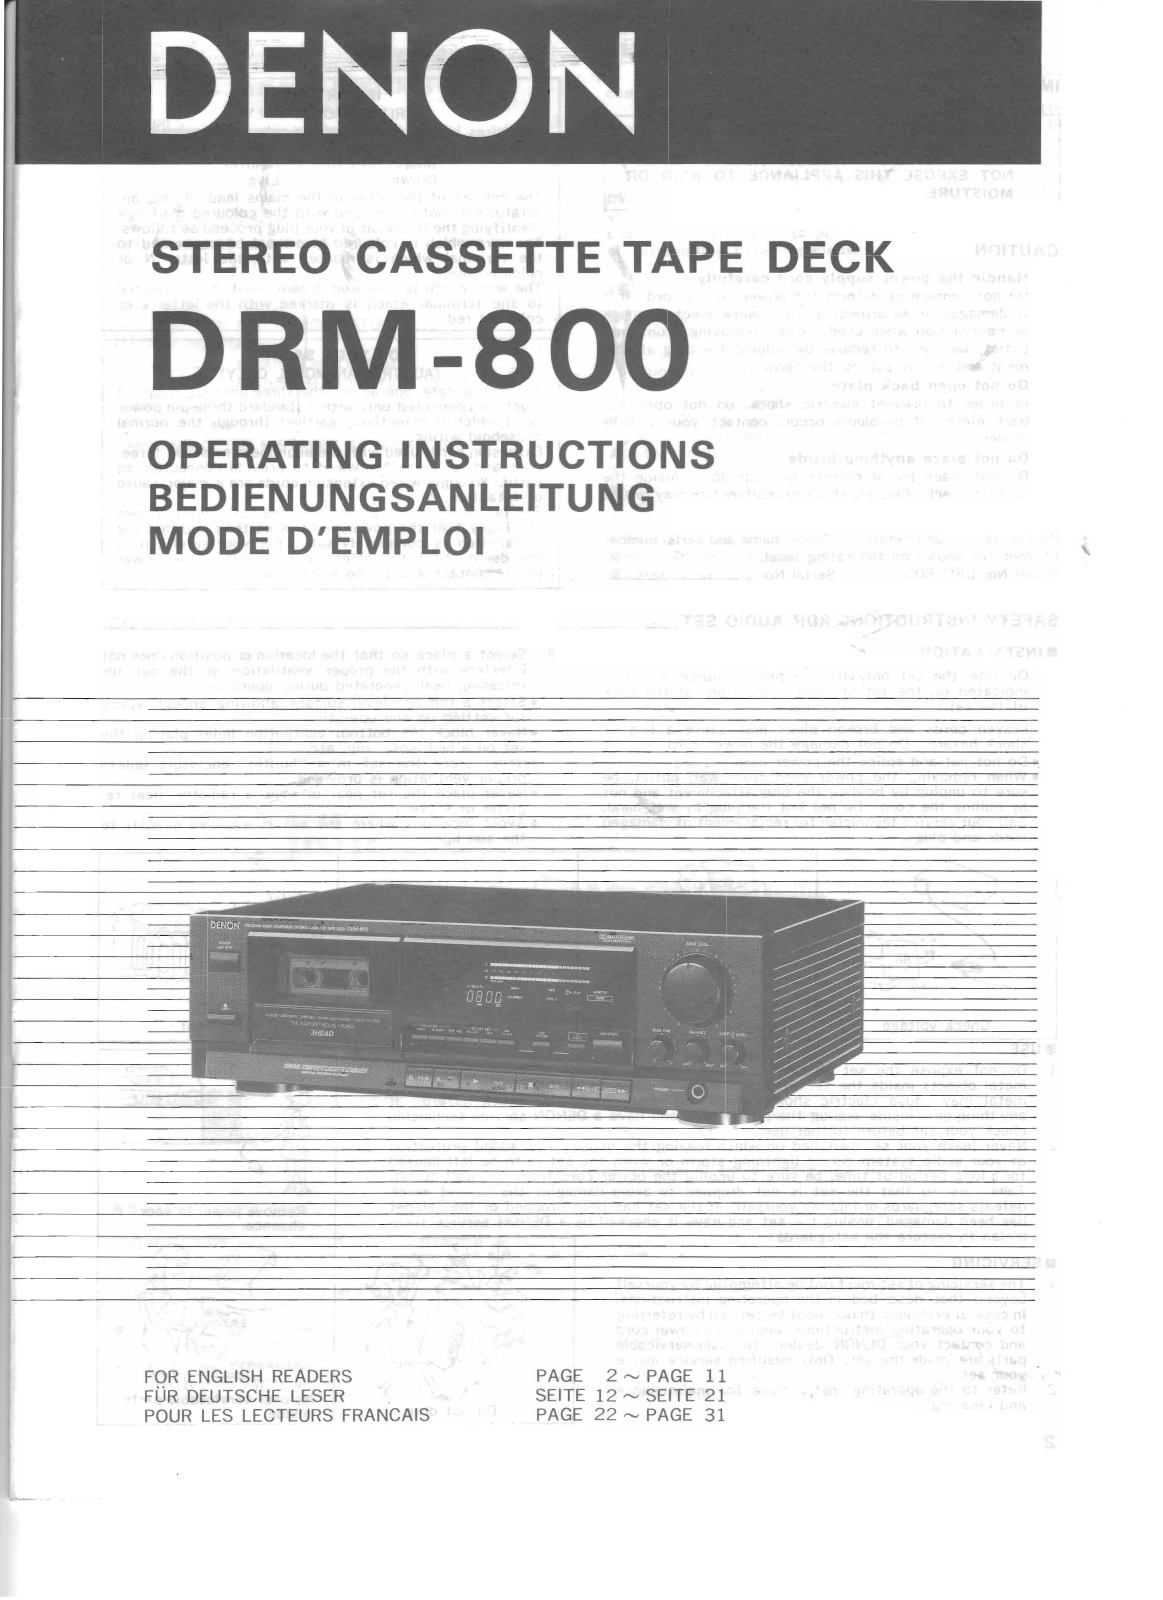 Denon DRM-800 Manual